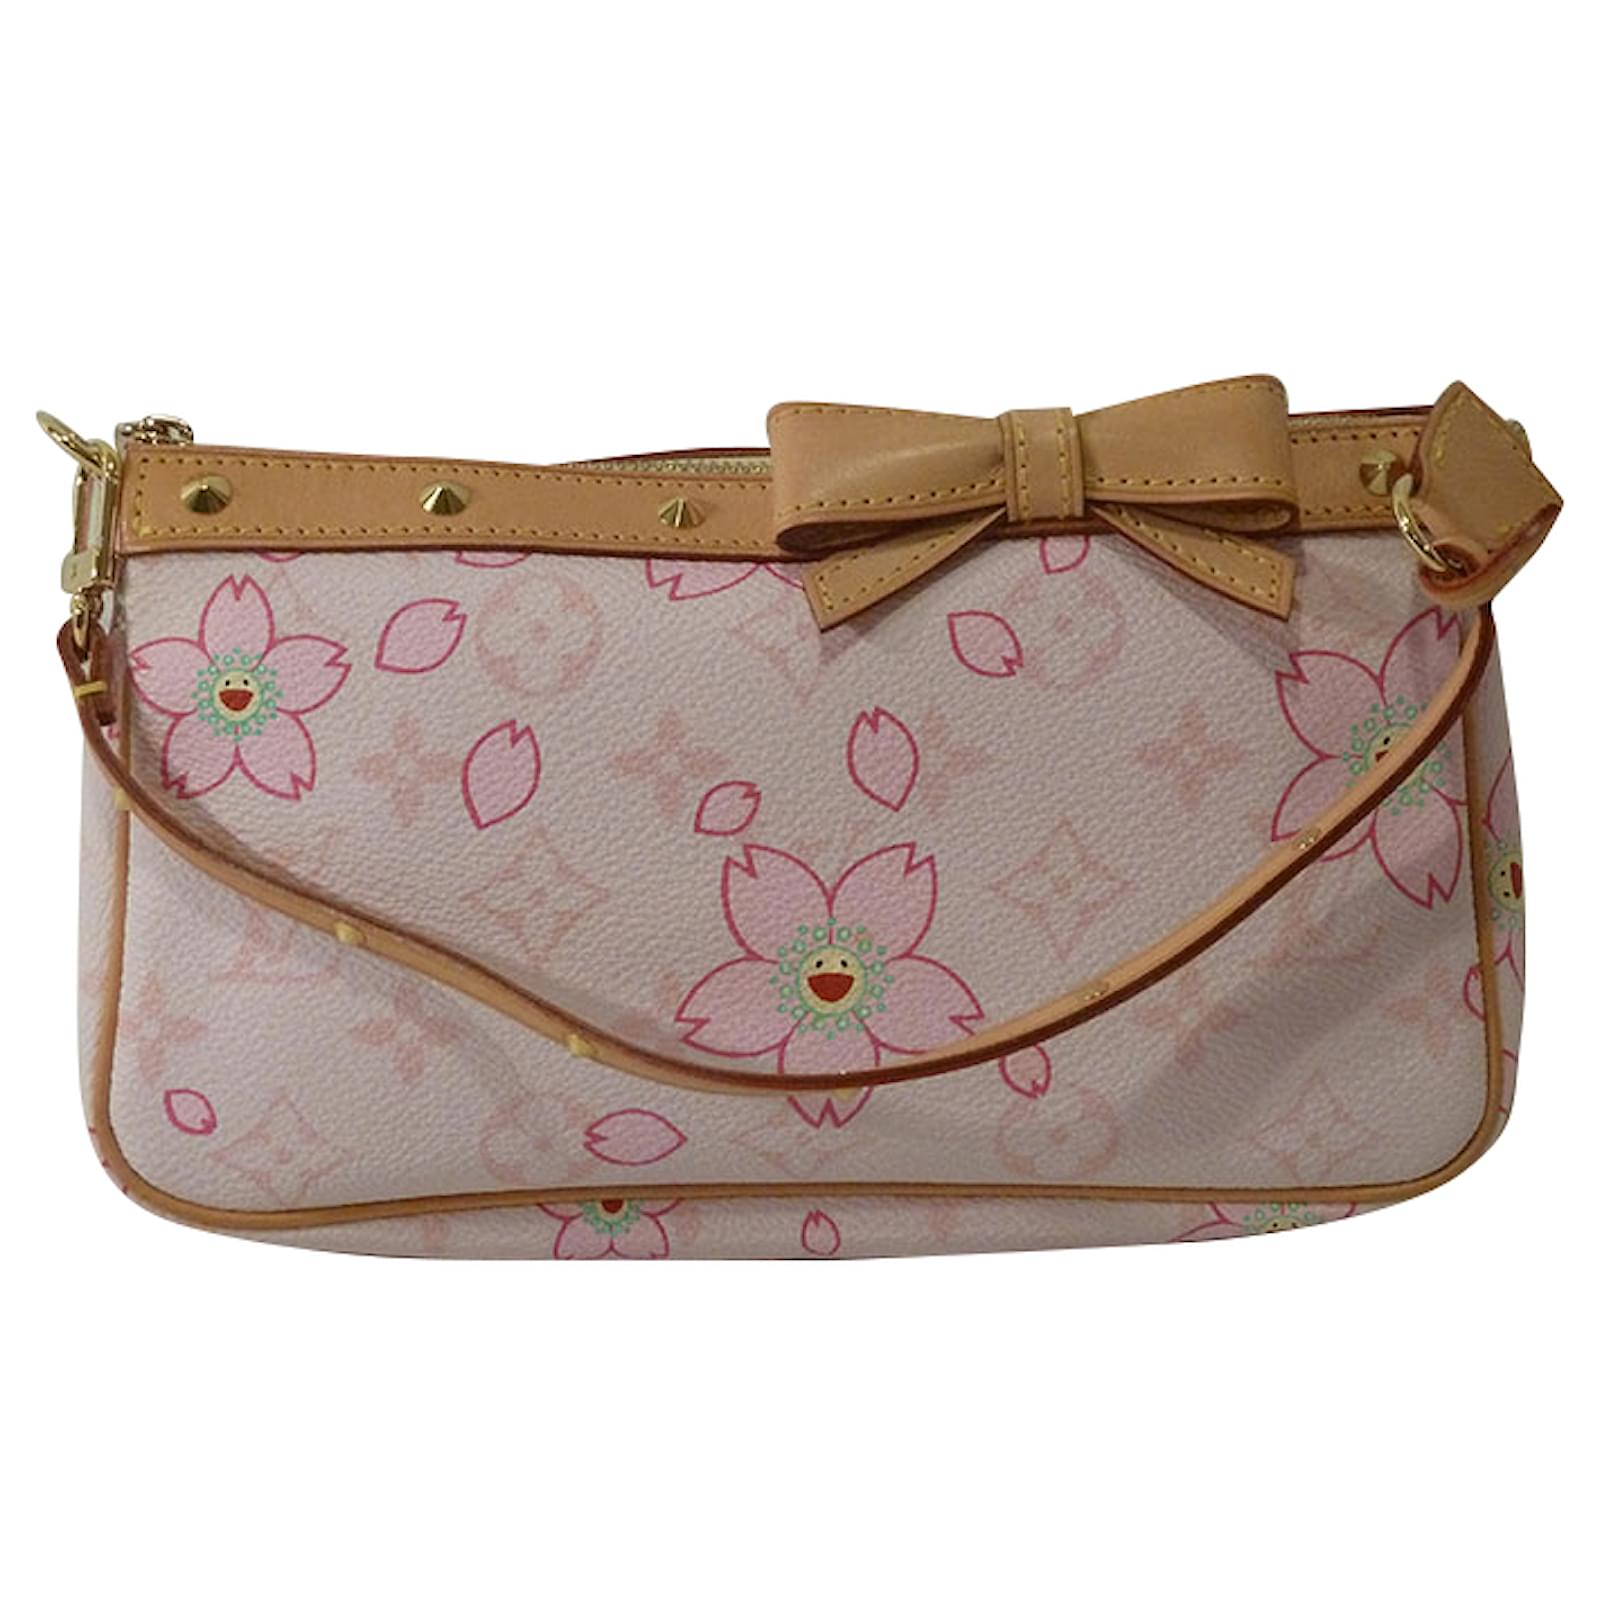 Louis Vuitton Takashi Murakami Cherry Blossom Monogram Stud Shoulder Bag Handbags Other Pink ref ...